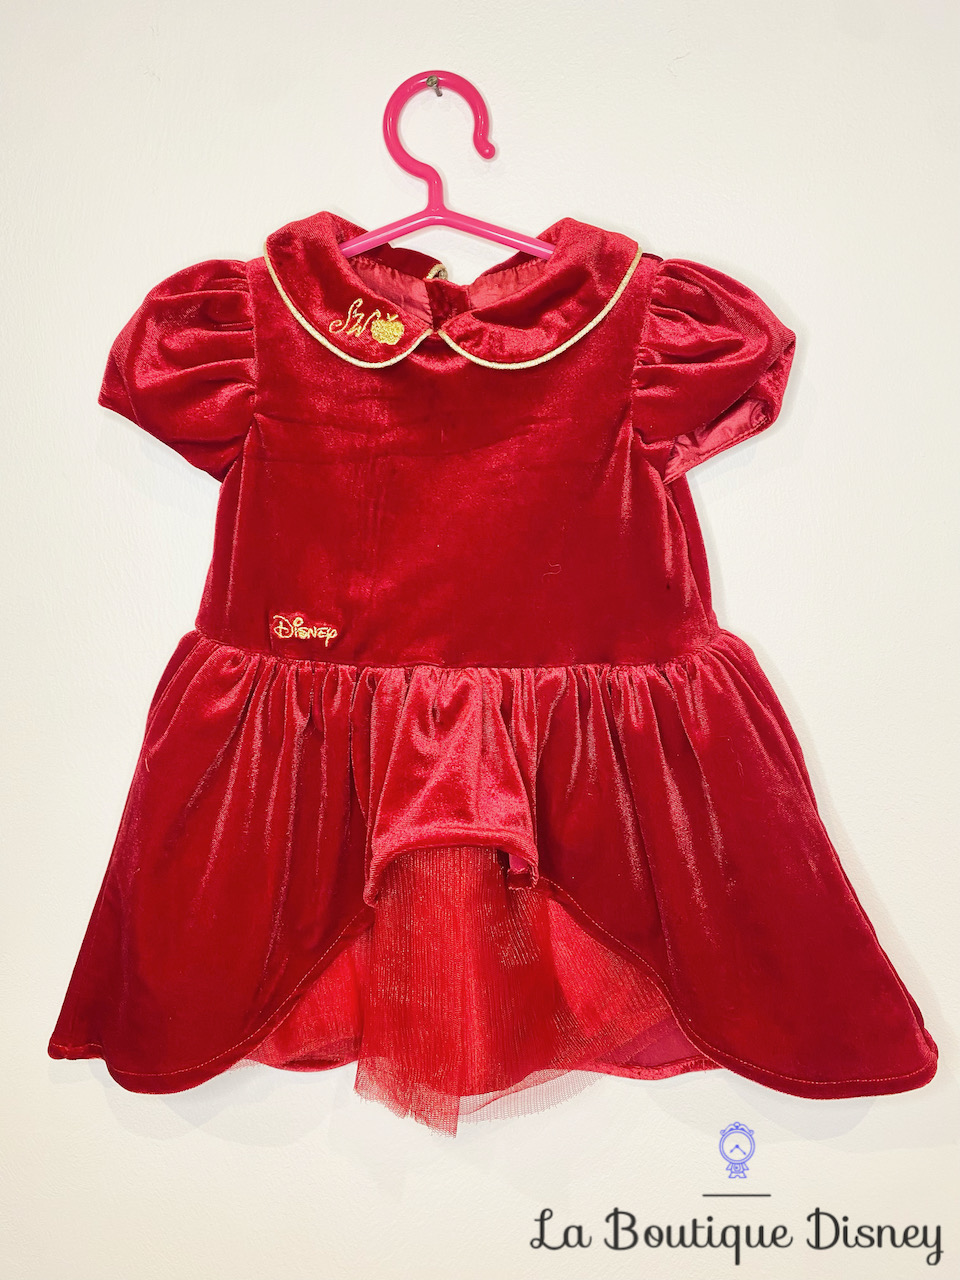 Robe Blanche Neige Disney taille 3-6 mois rouge velours pomme SW